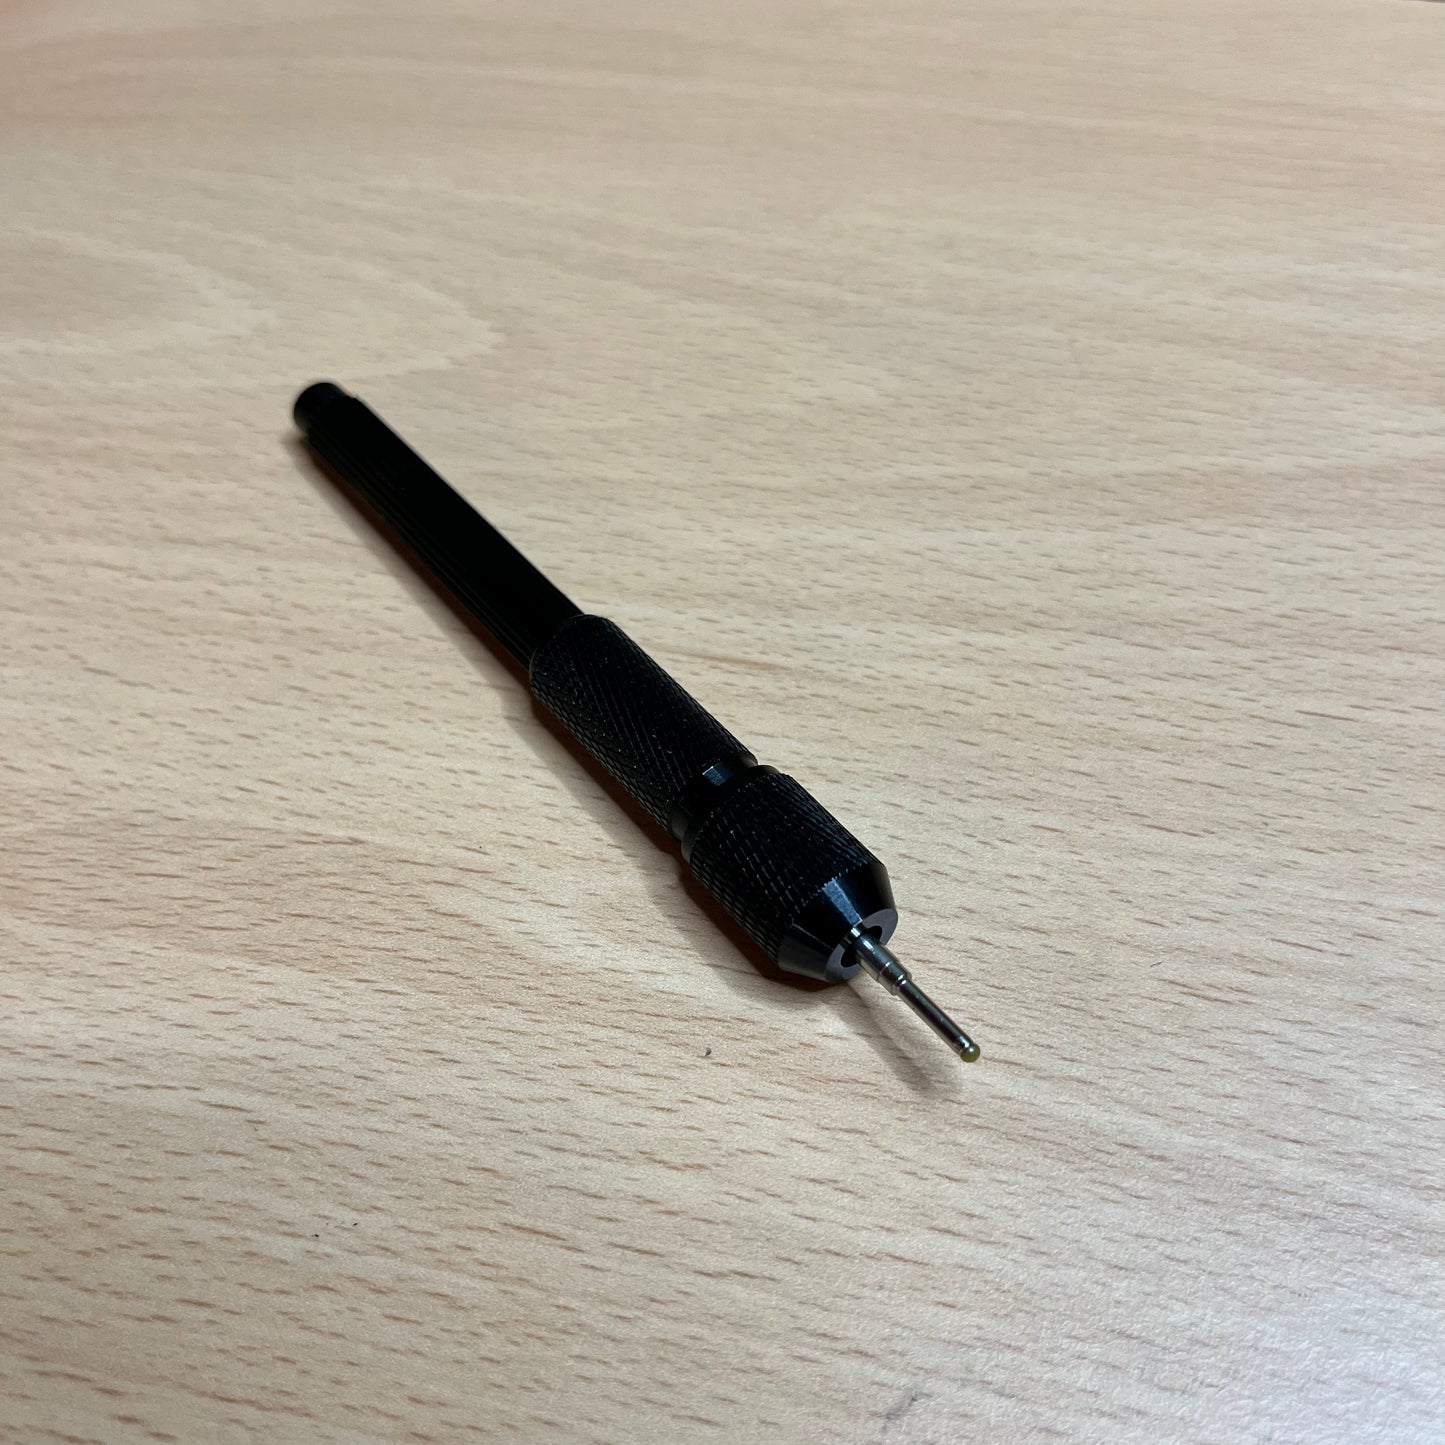 Skin Marker Pen with Refills